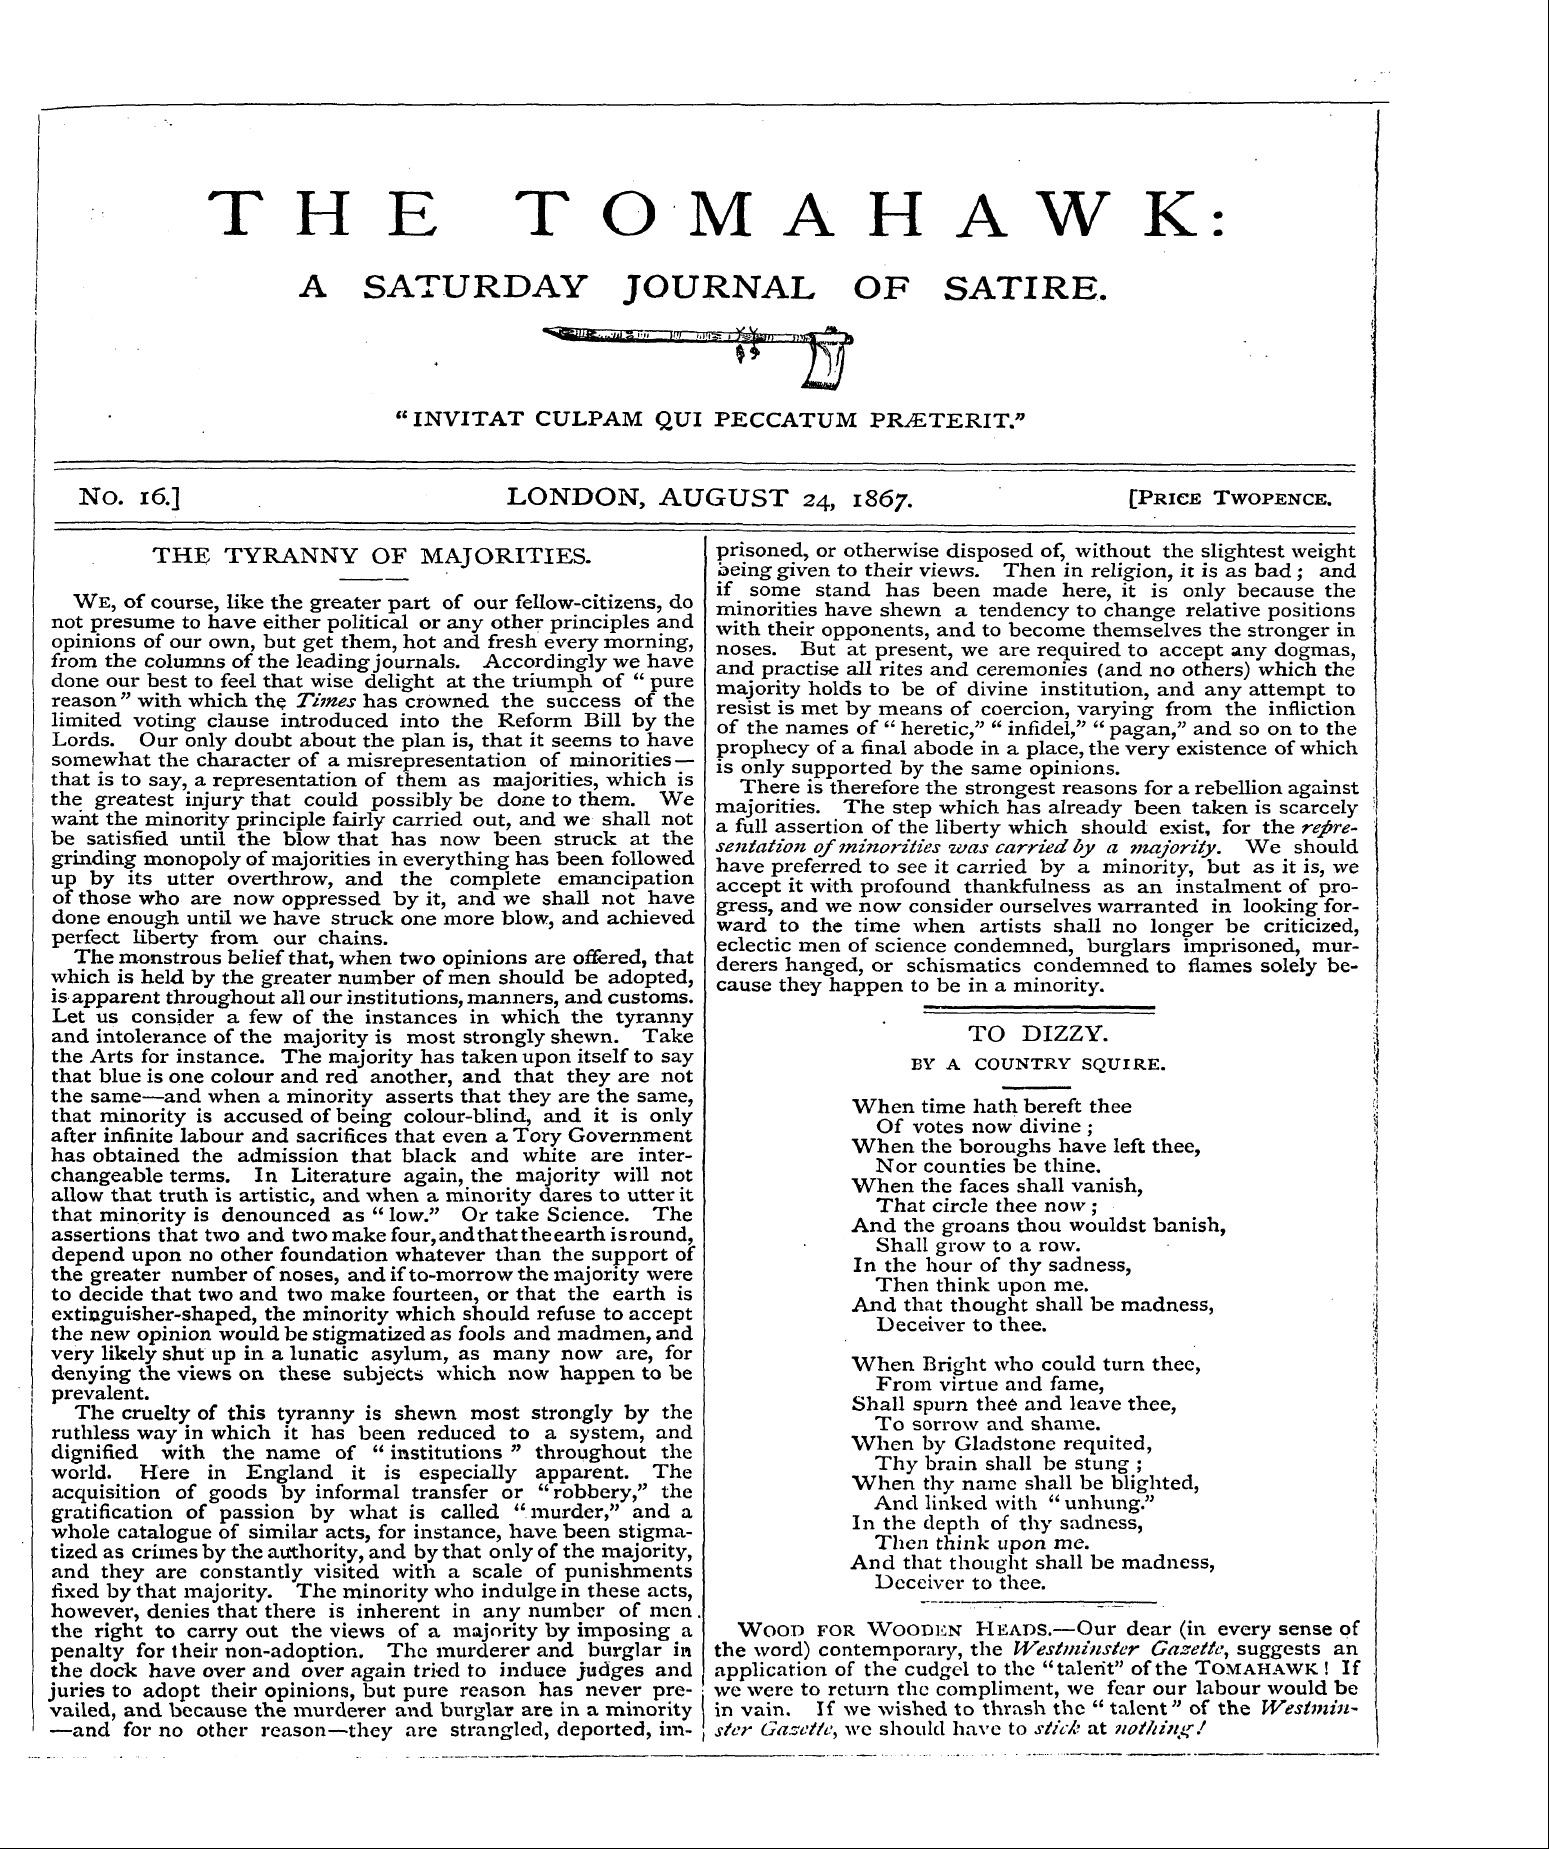 Tomahawk (1867-1870)